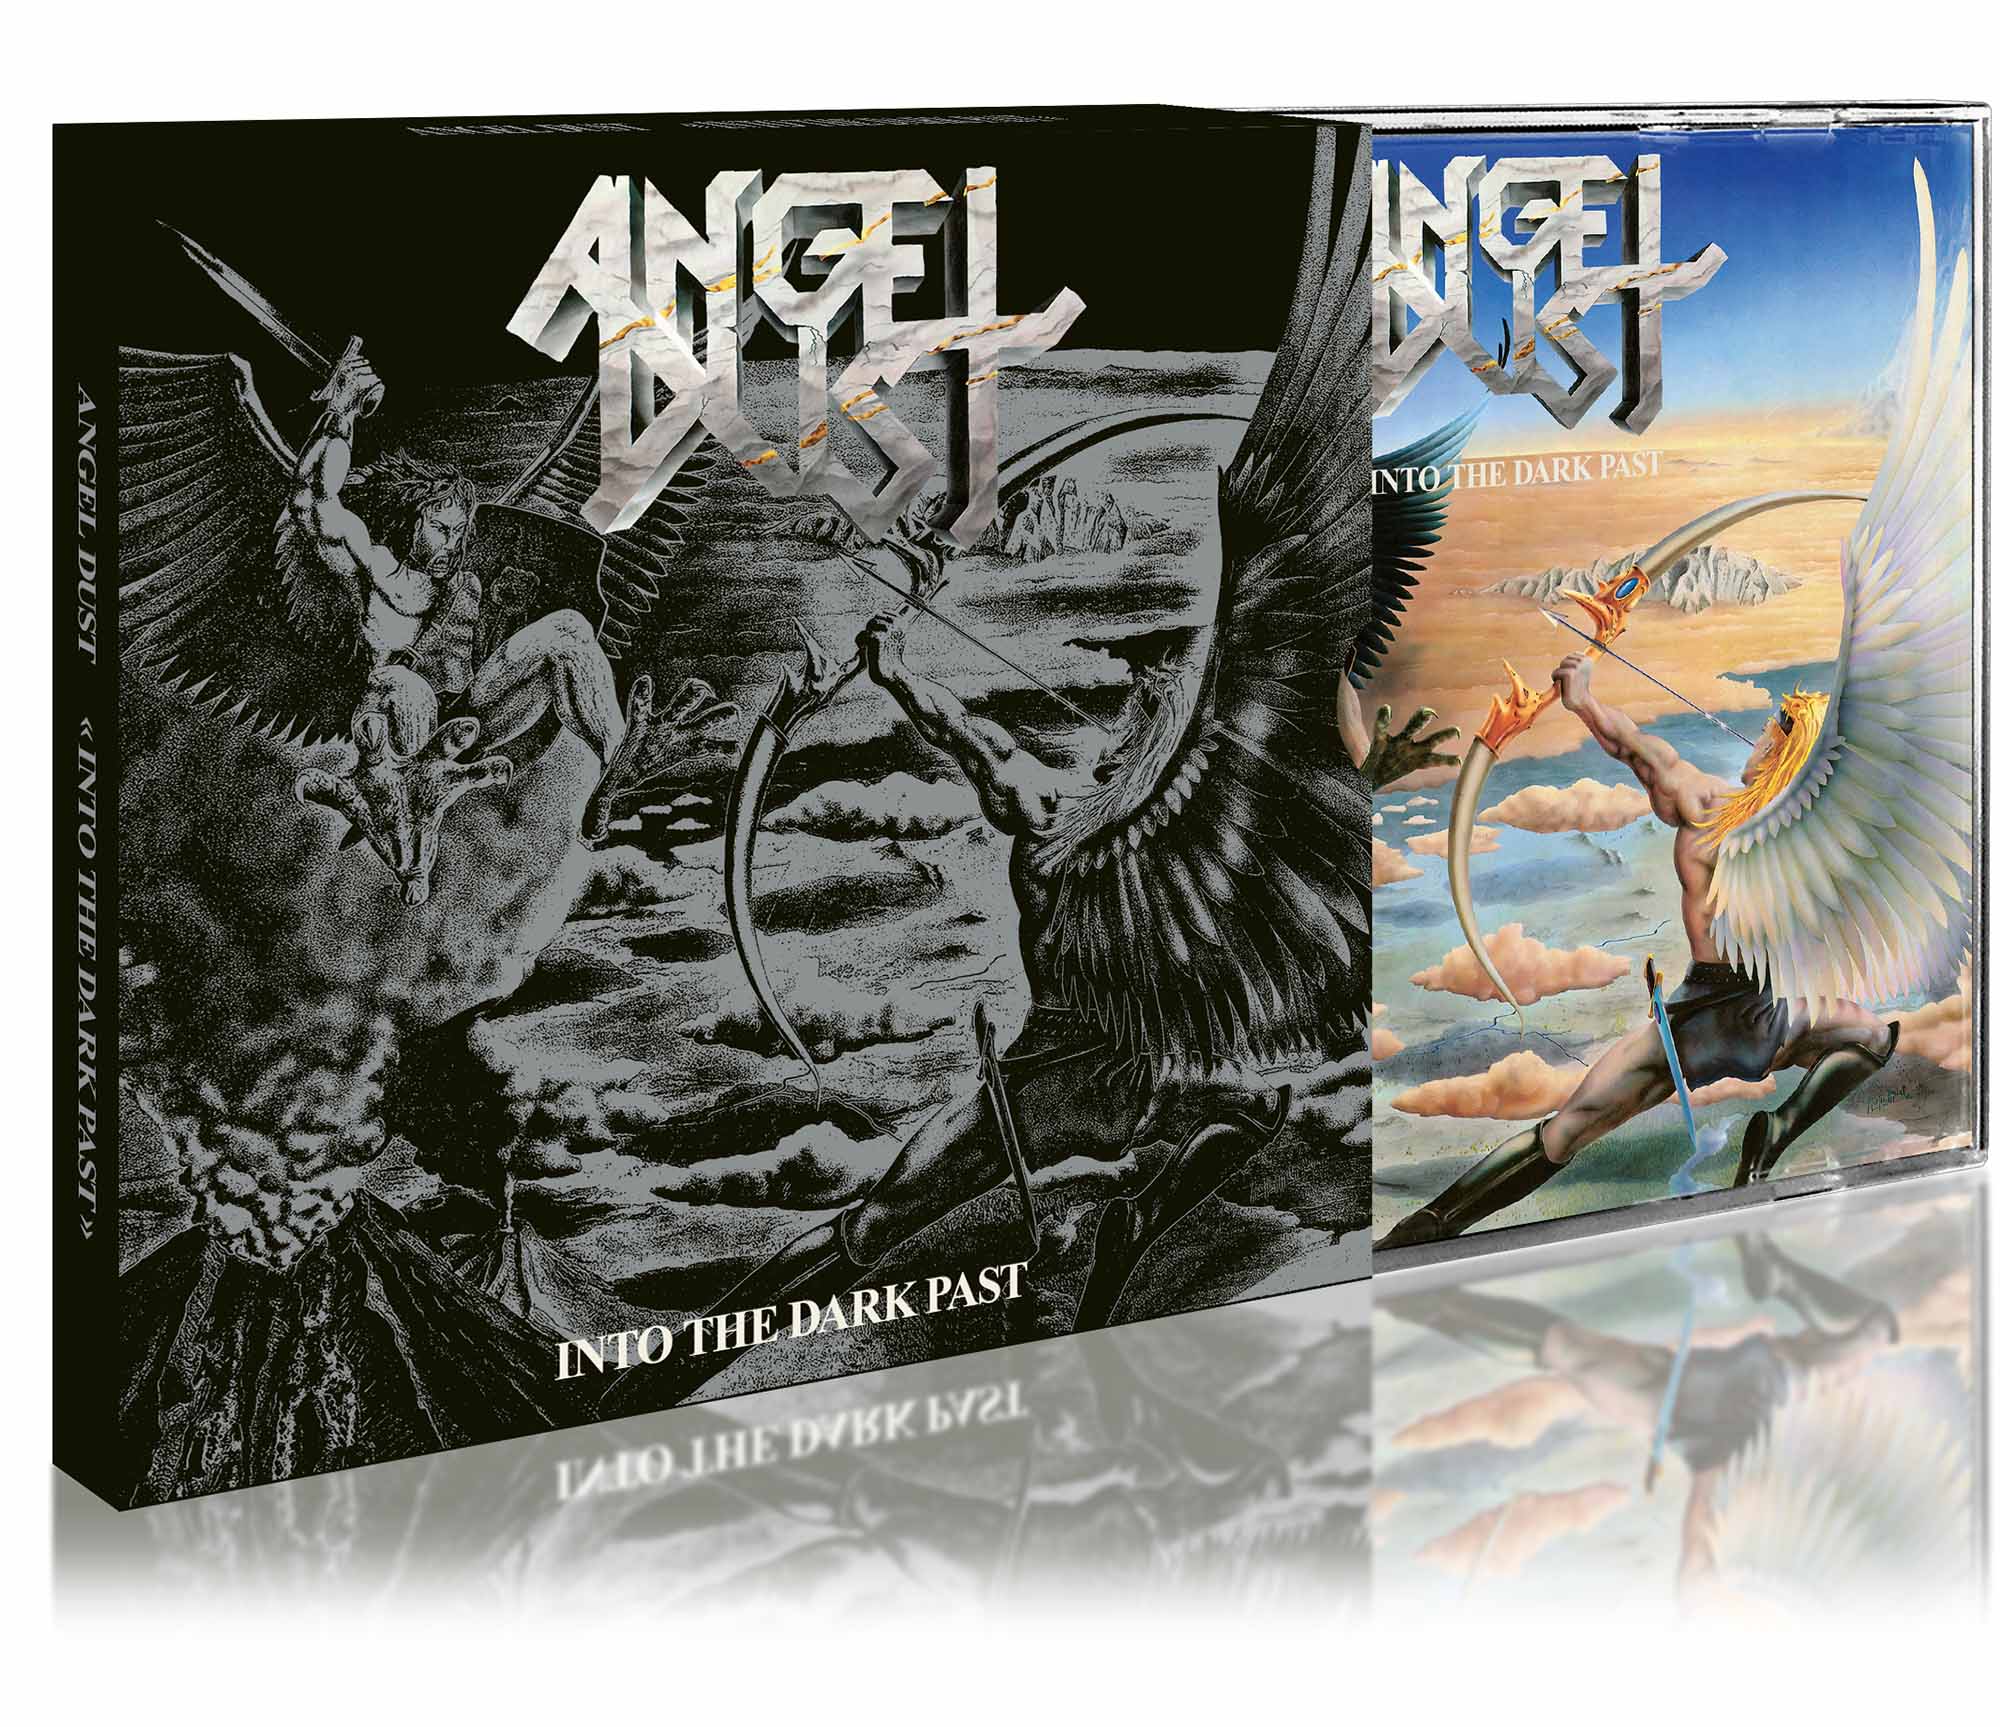 ANGEL DUST - Into the Dark Past  CD